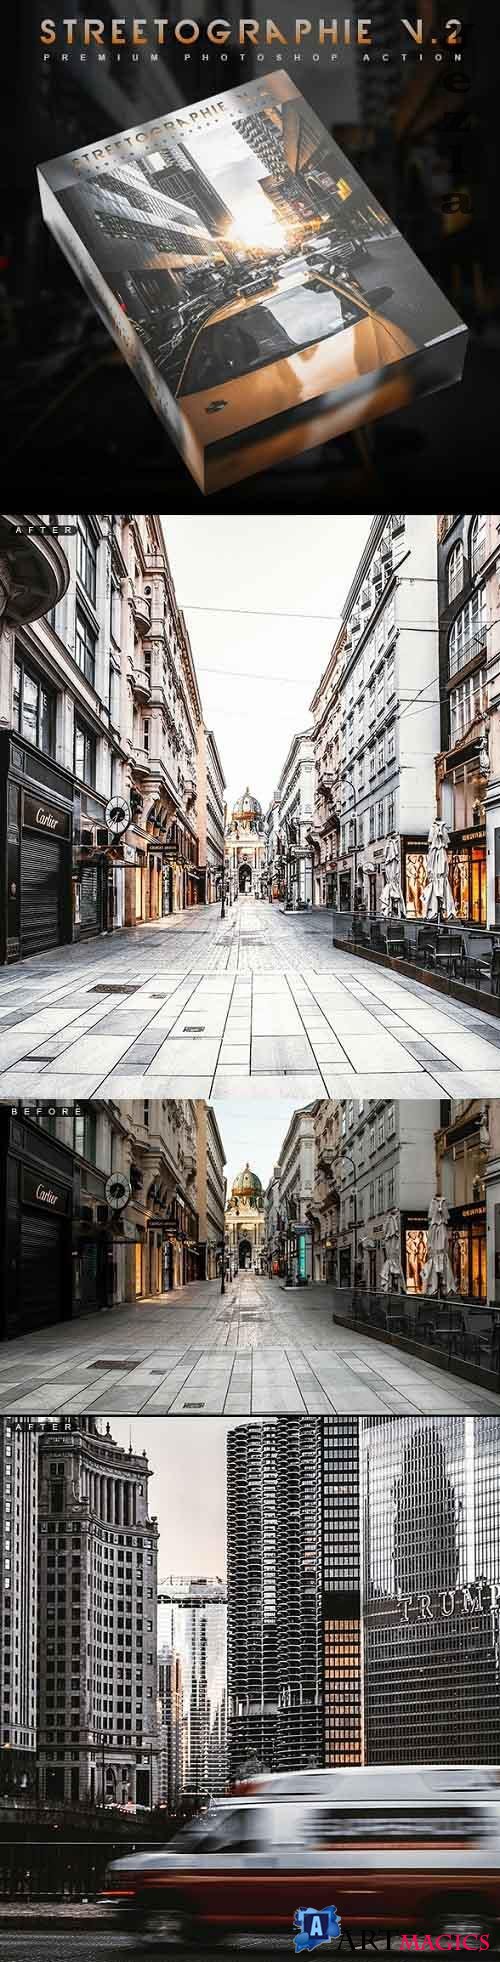 Streetographie V.2 - Premium Photoshop Action 26769090